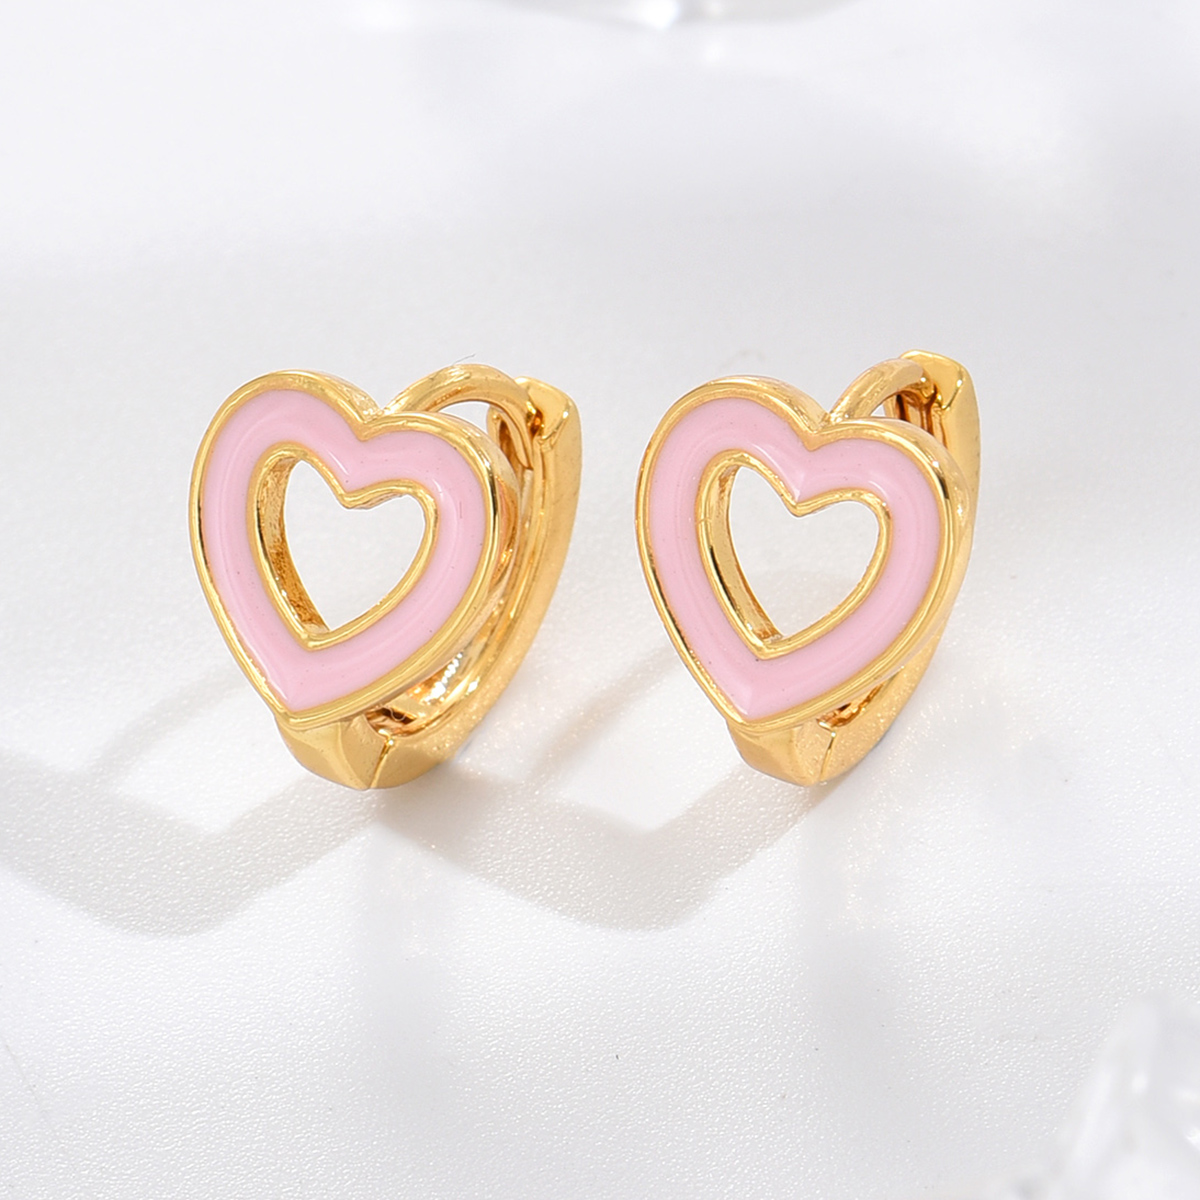 10 pcs - Pink Enamel Love Heart Huggie Hoop Gold Plated Earrings|GCJ388|UK SELLER